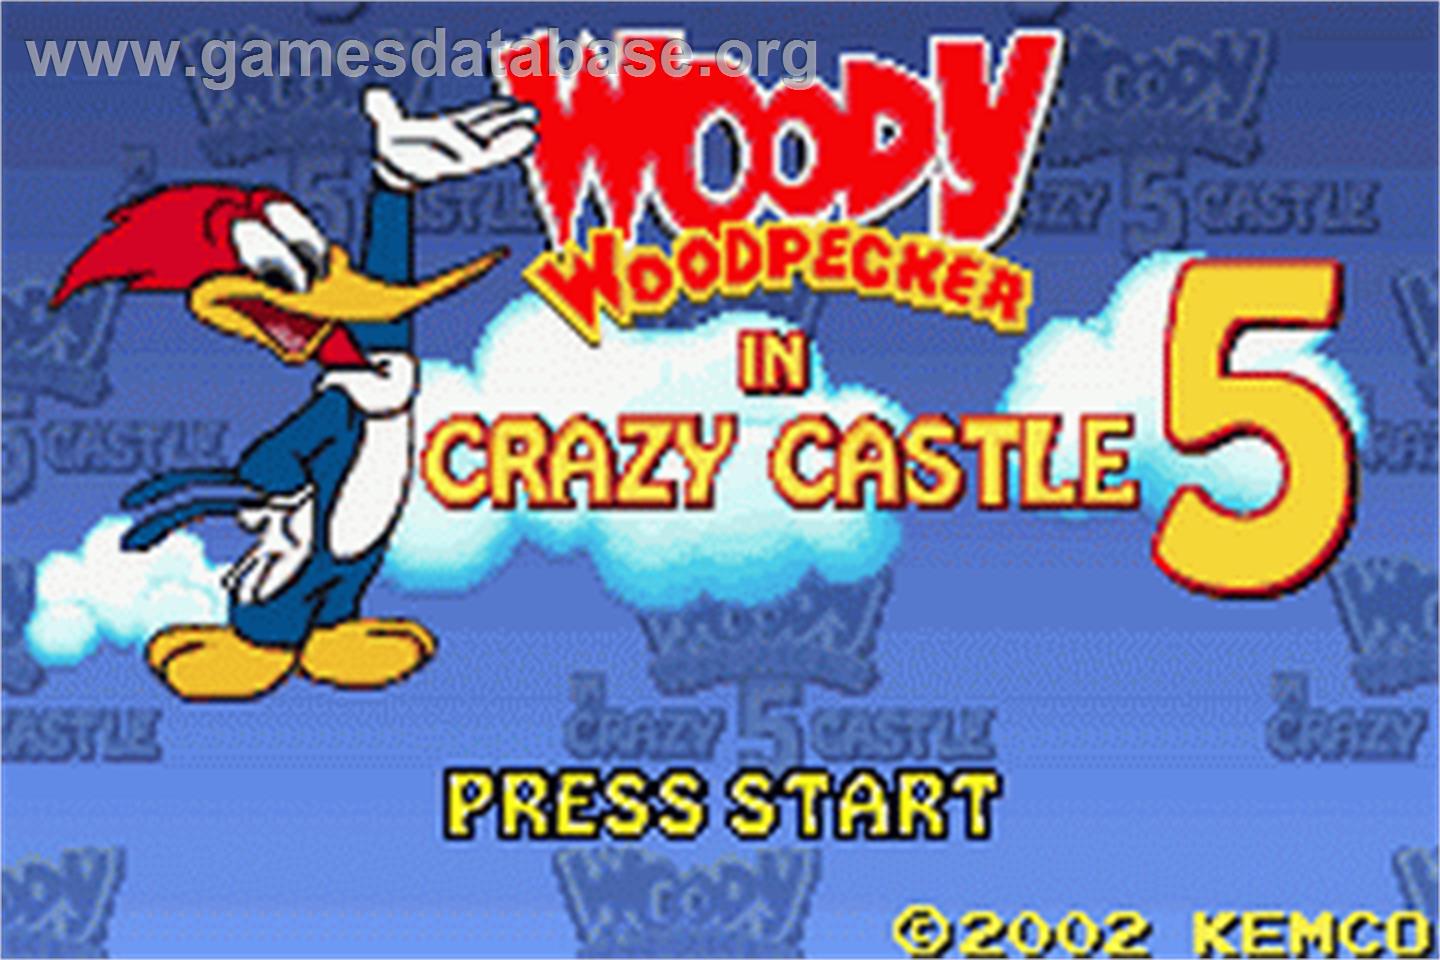 Woody Woodpecker in Crazy Castle 5 - Nintendo Game Boy Advance - Artwork - Title Screen